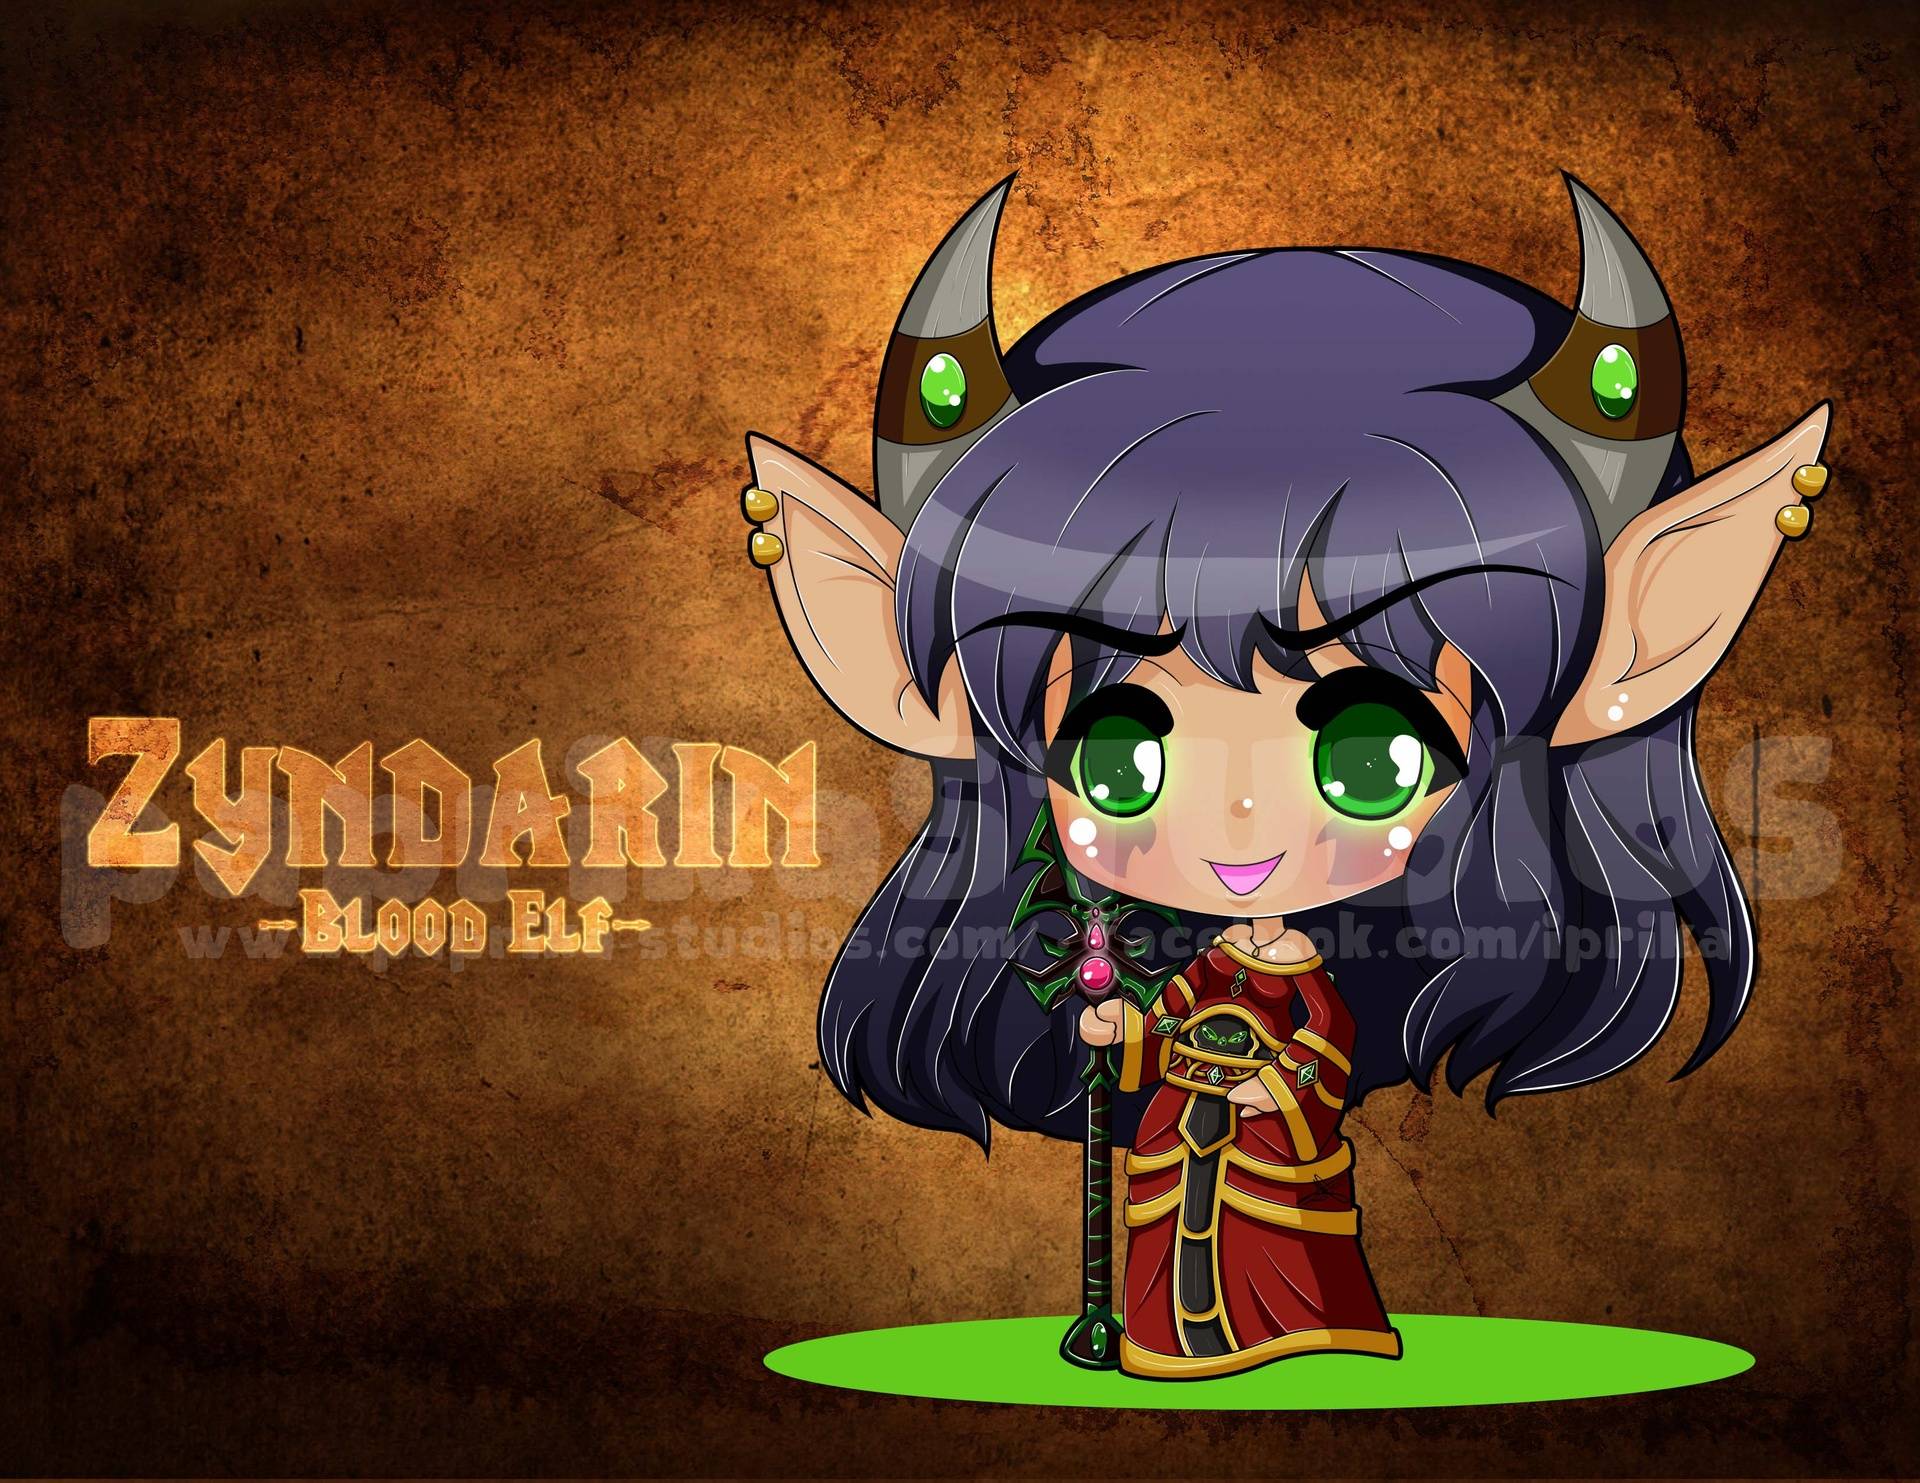 Chibi Blood Elf Zyndarin